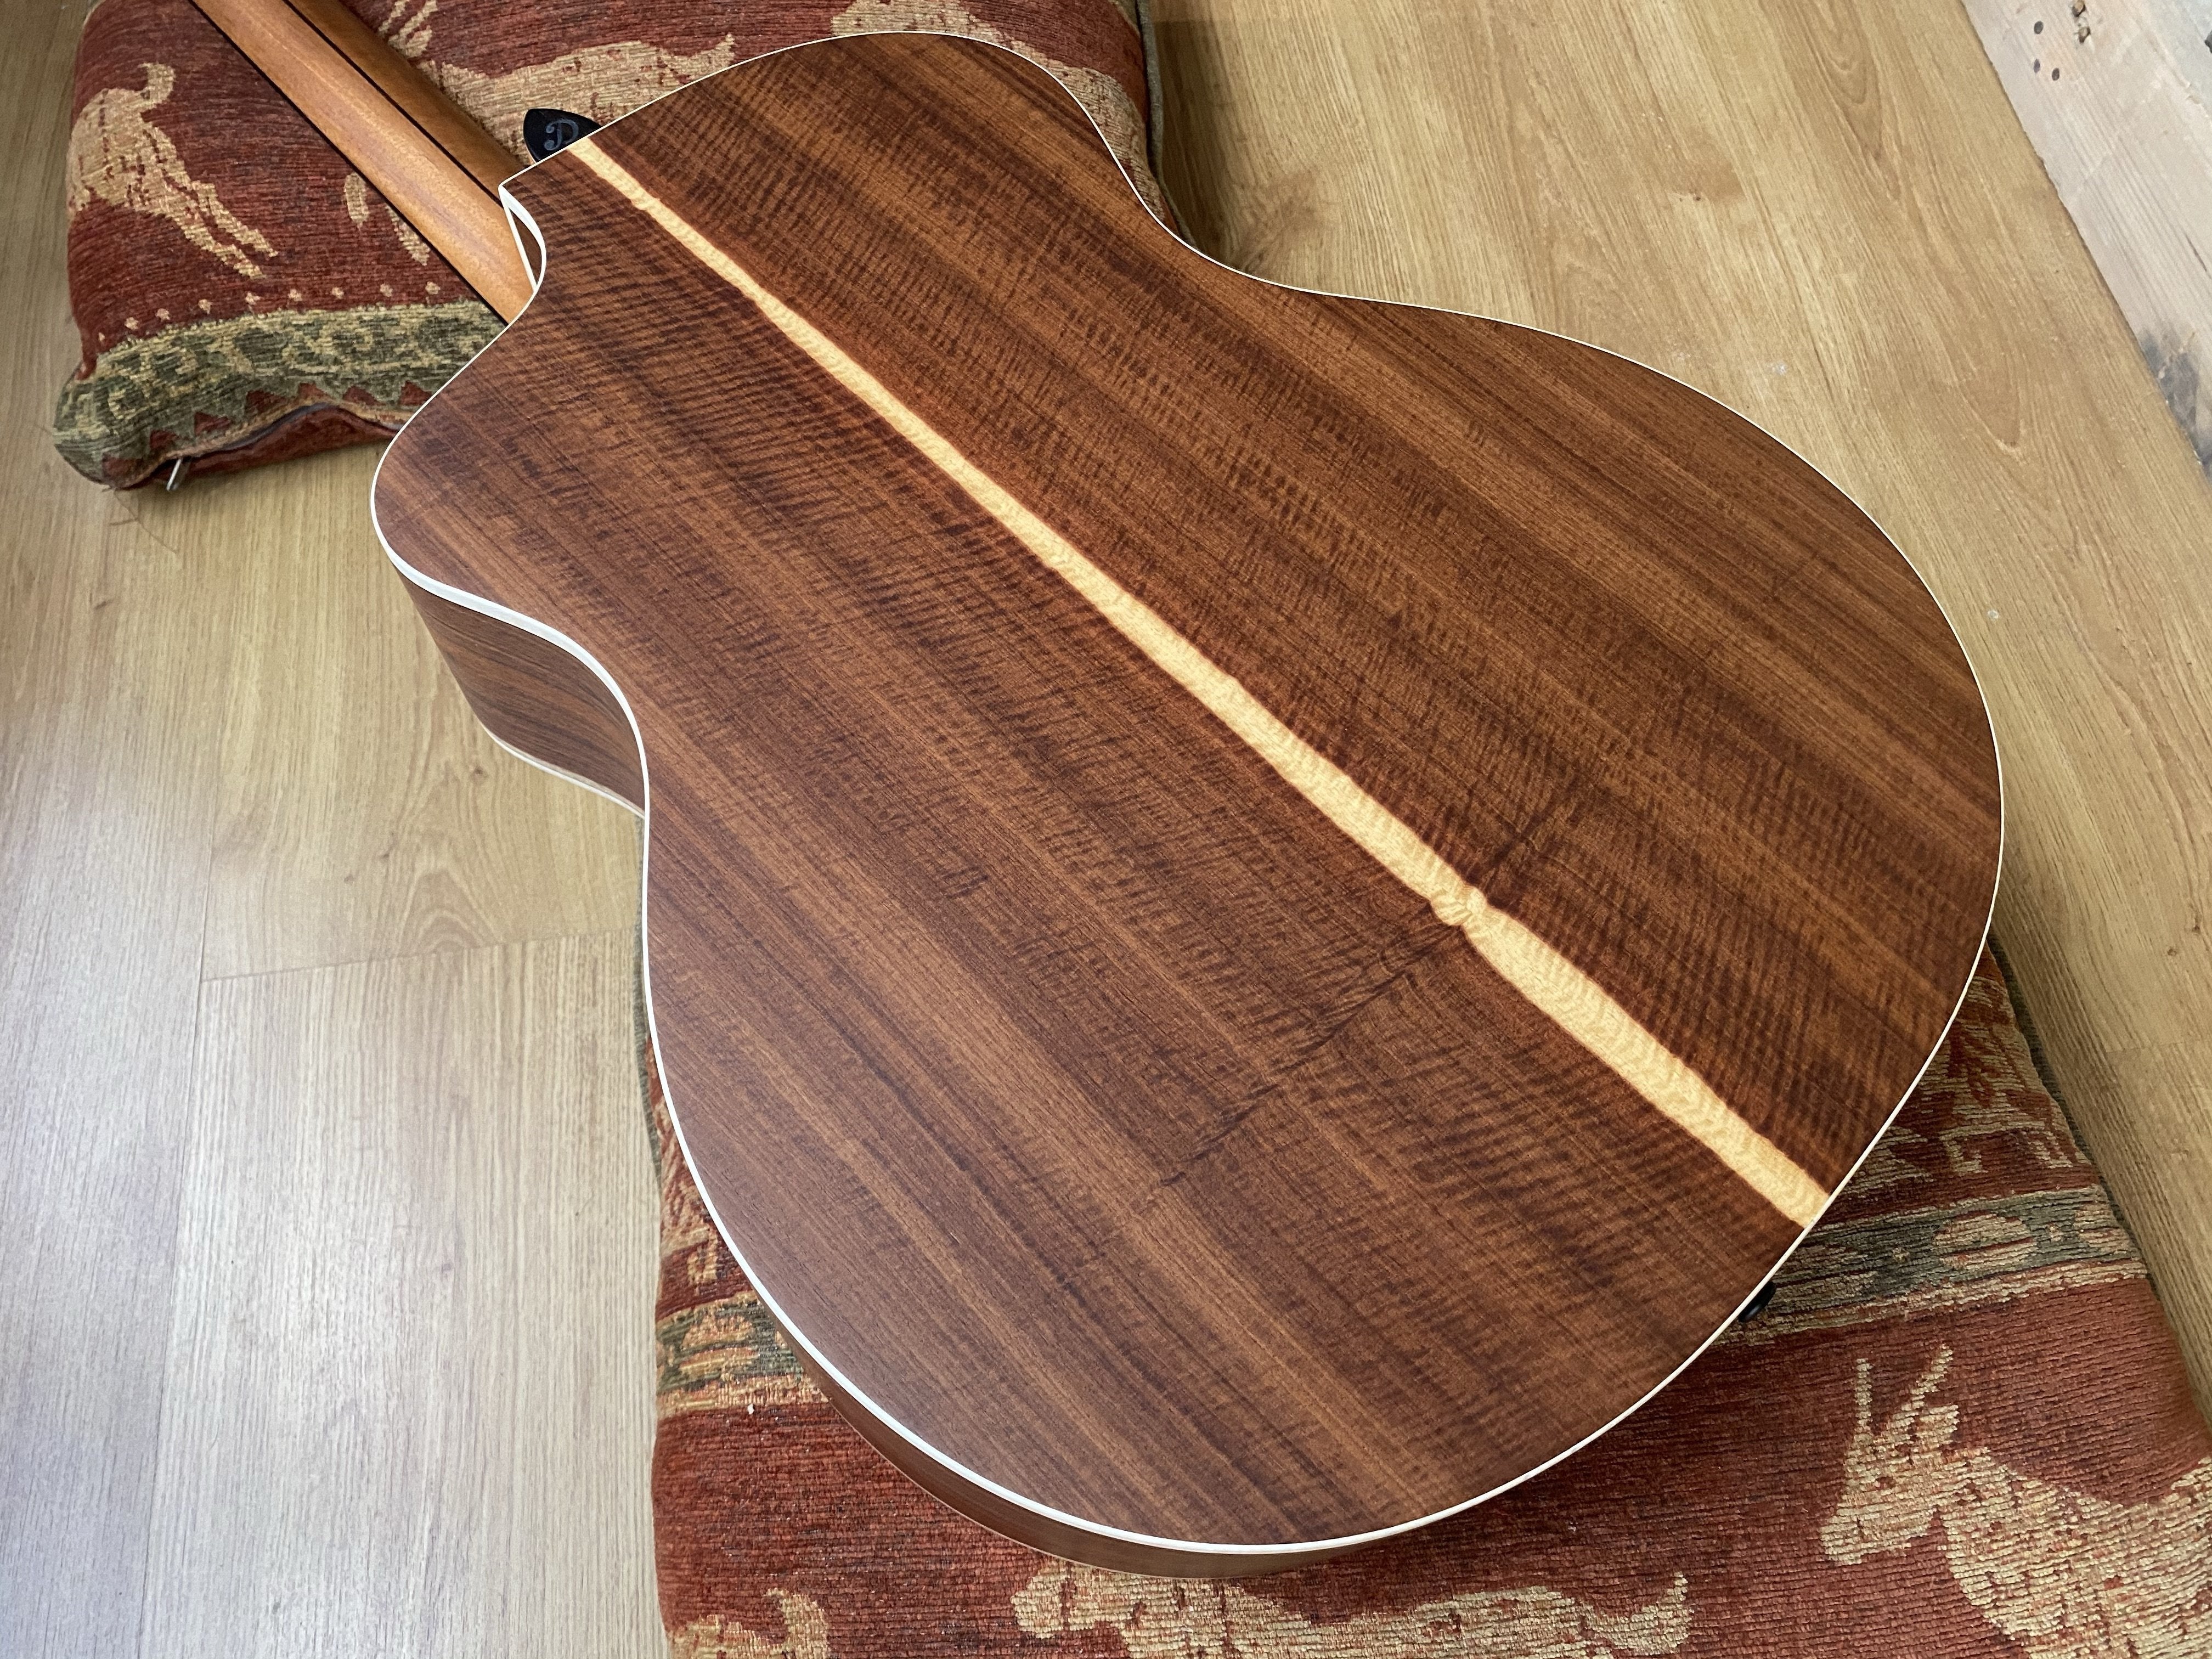 Dowina Granadillo GAC Masters Series, Acoustic Guitar for sale at Richards Guitars.